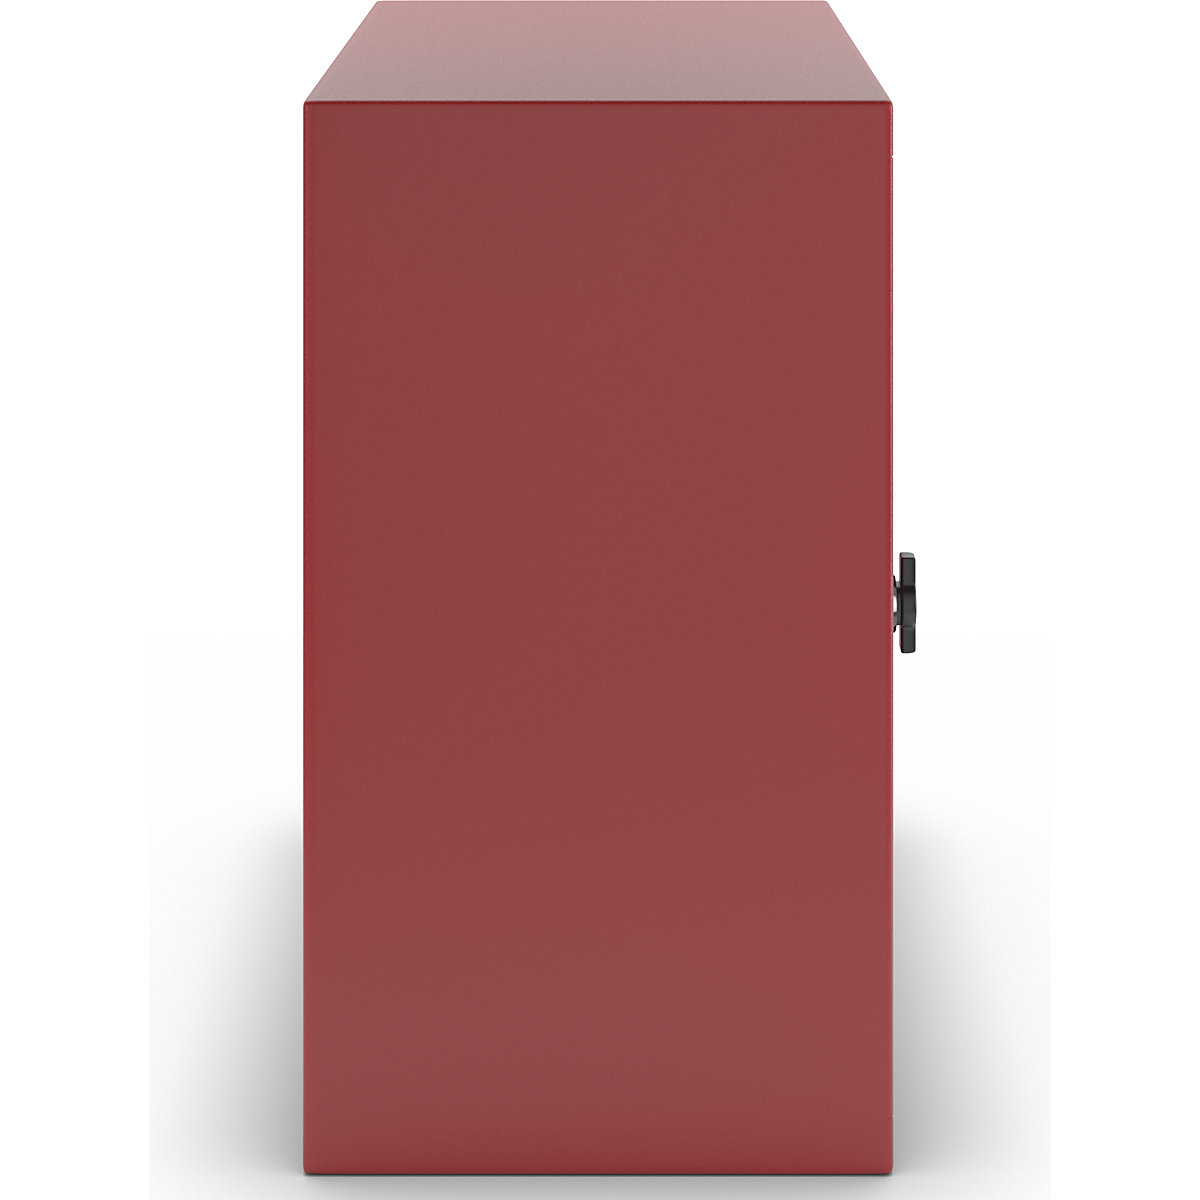 Defibrillator cupboard – Pavoy (Product illustration 6)-5